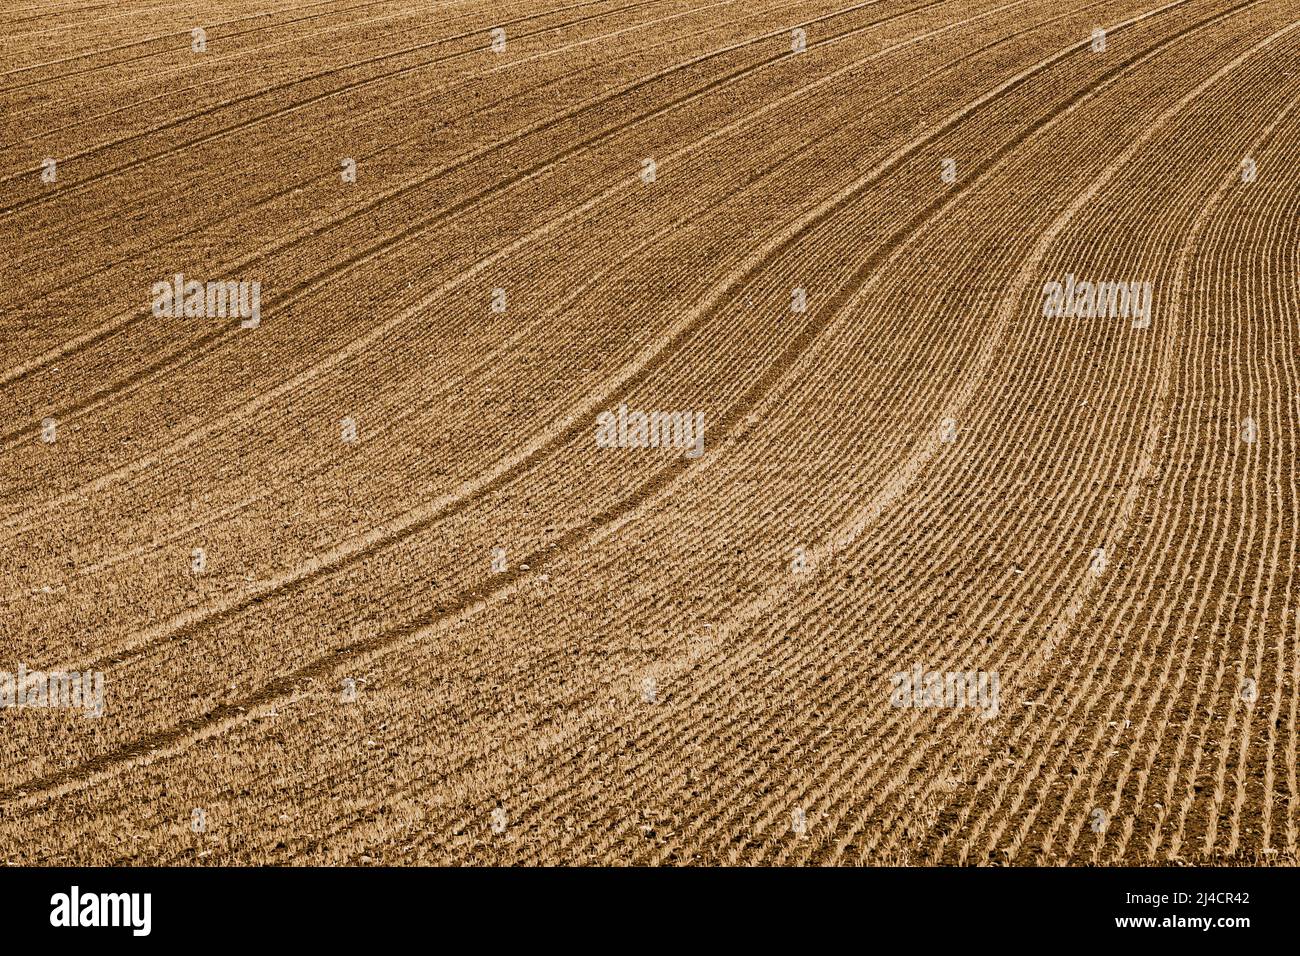 Agricultural landscape, field with ruts, structure on a field, Sepiafahrben, Innviertel, Upper Austria, Austria Stock Photo